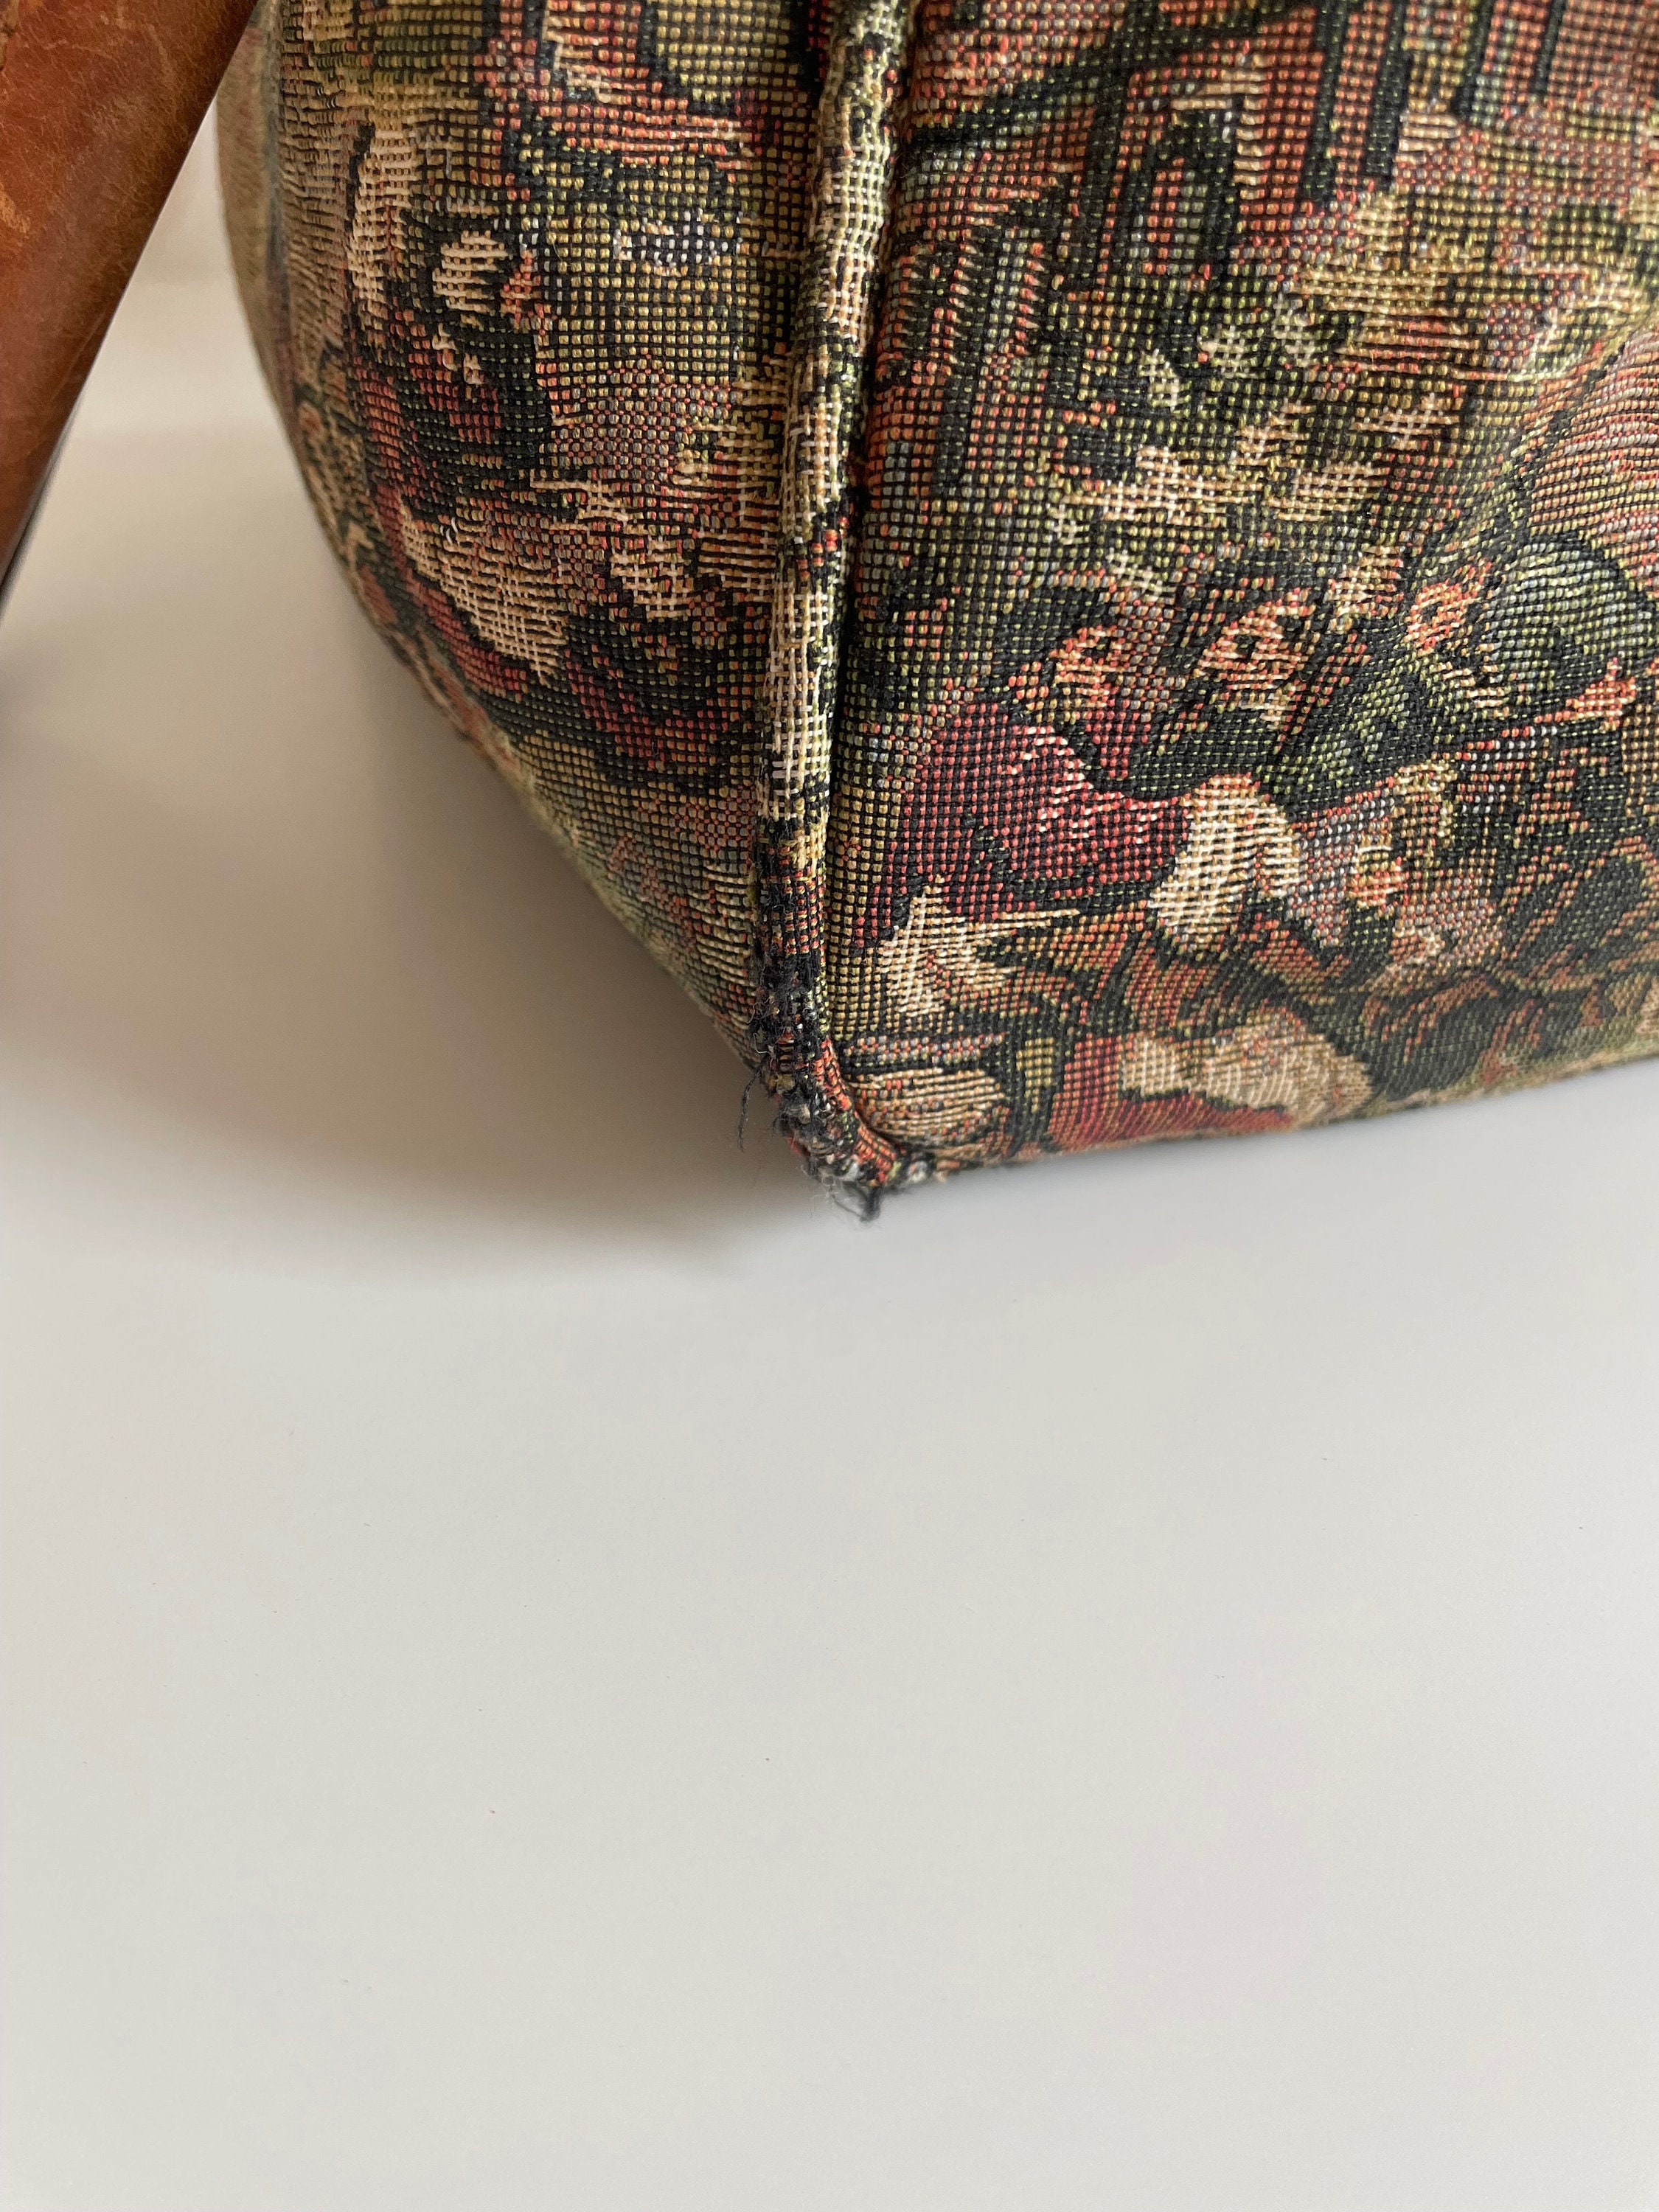 Gobelins Art Medieval Tapestry Canvas & Leather Handbag // 